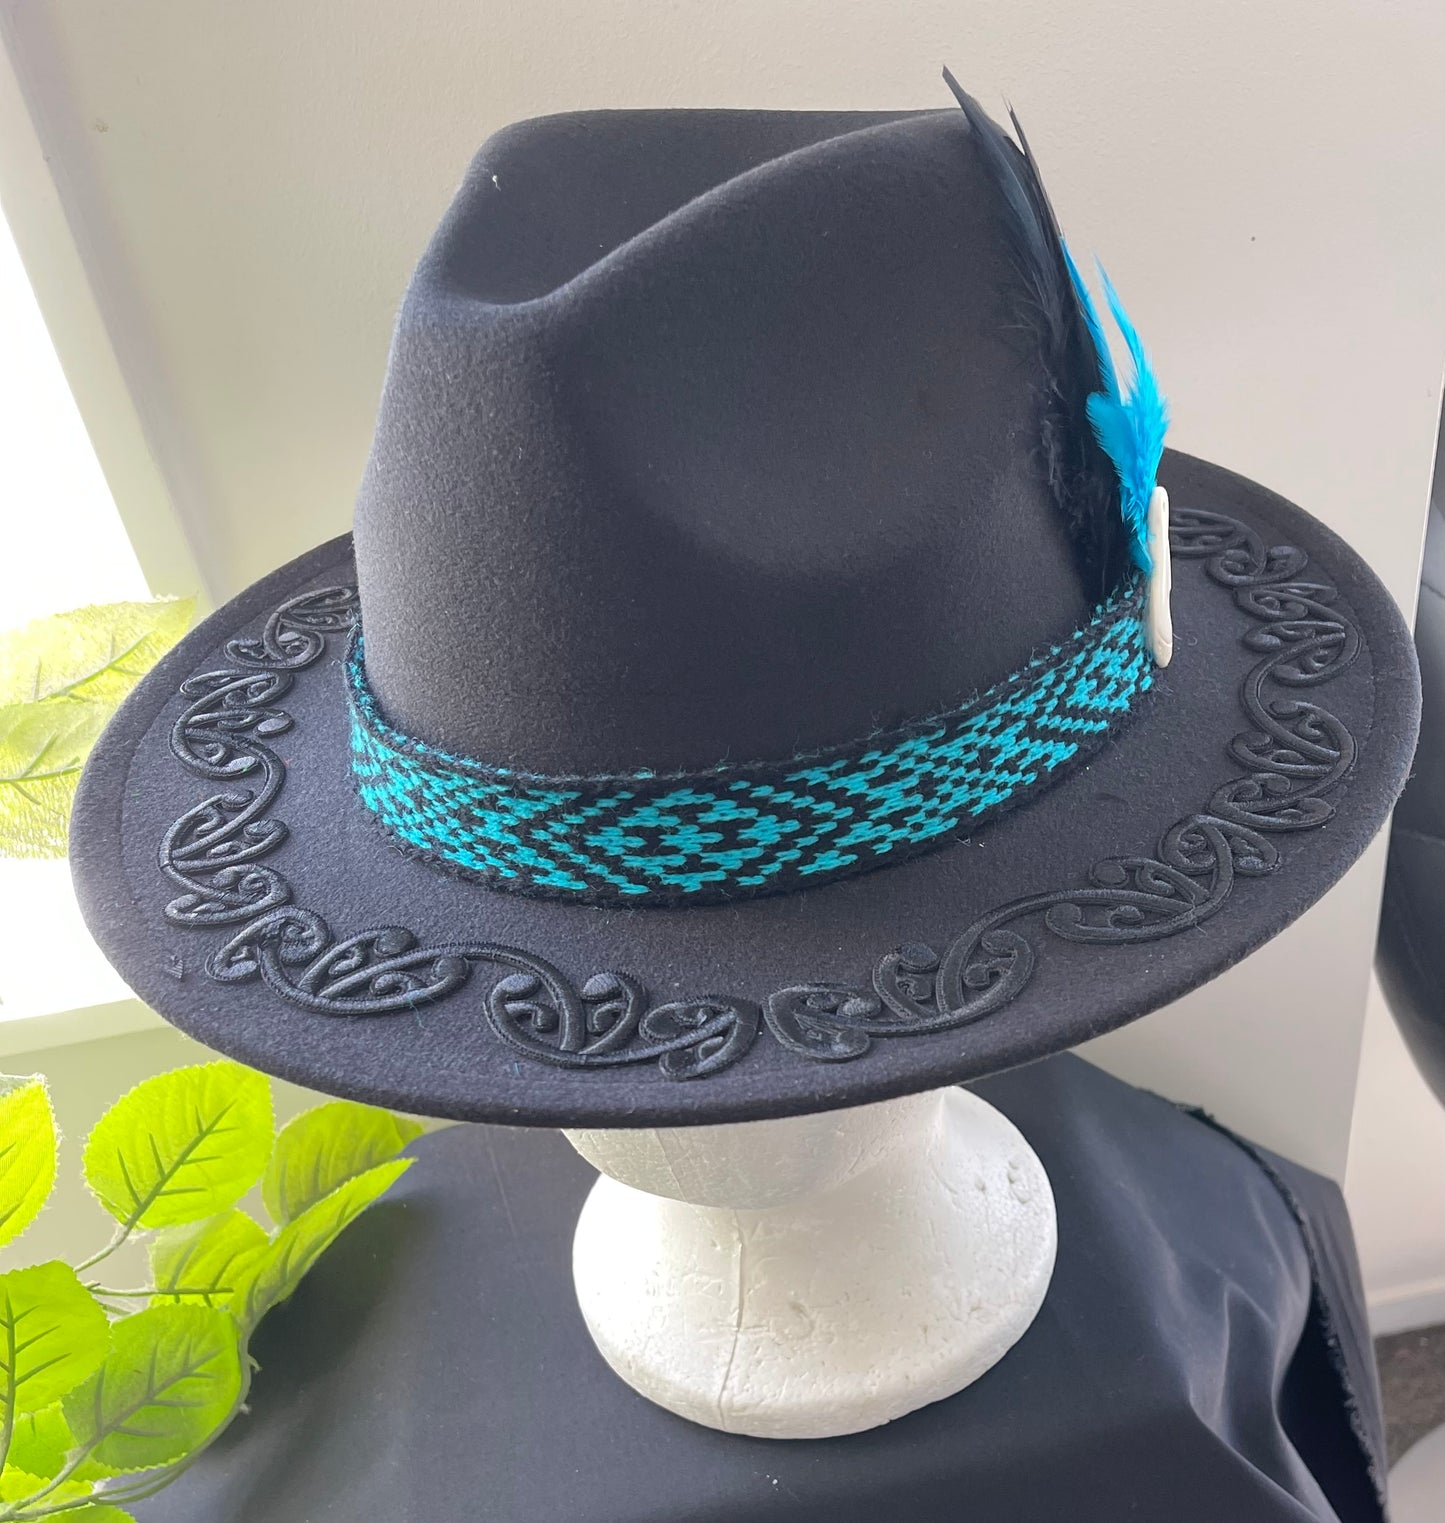 Potae - Black Fedora Felt Hat